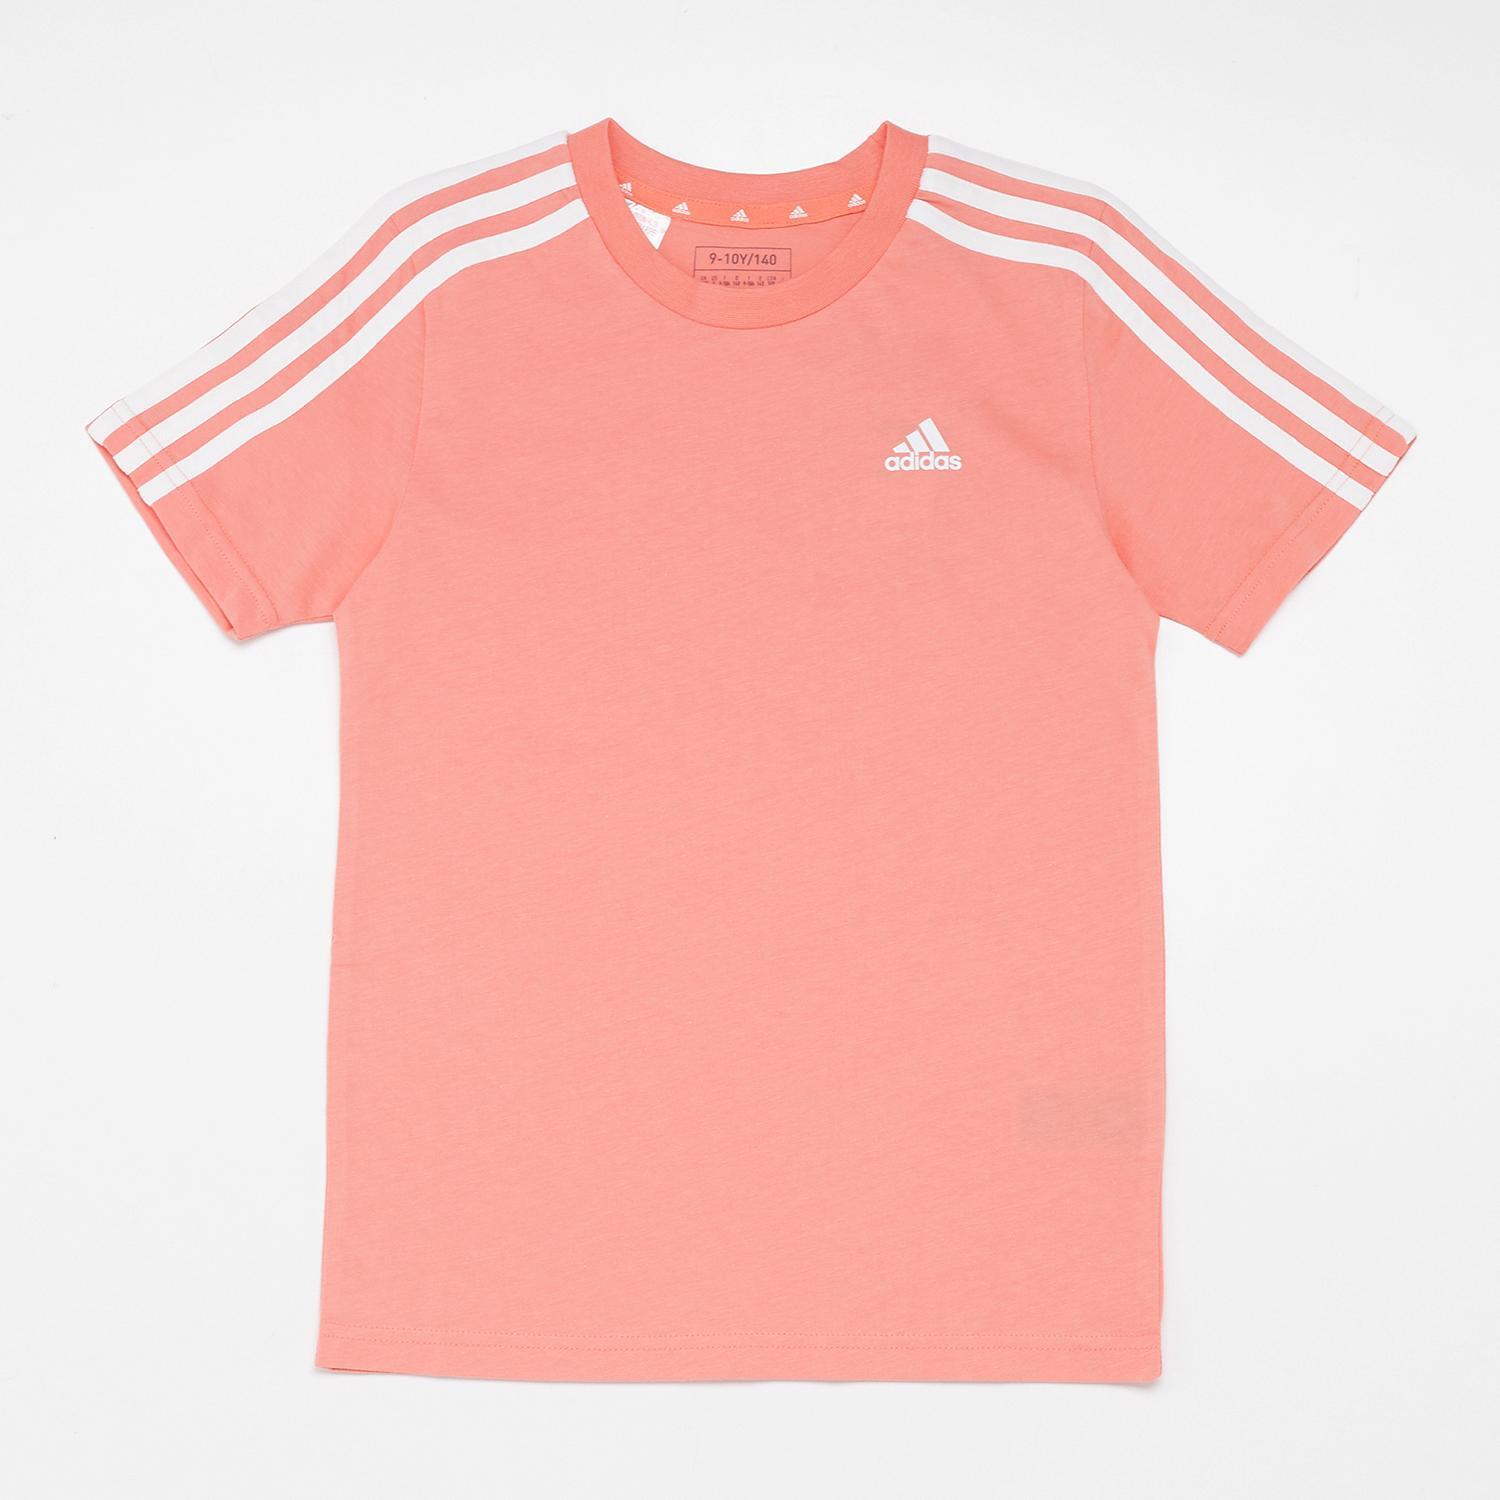 Adidas 3 Stripes Oranje T-shirt Jongens